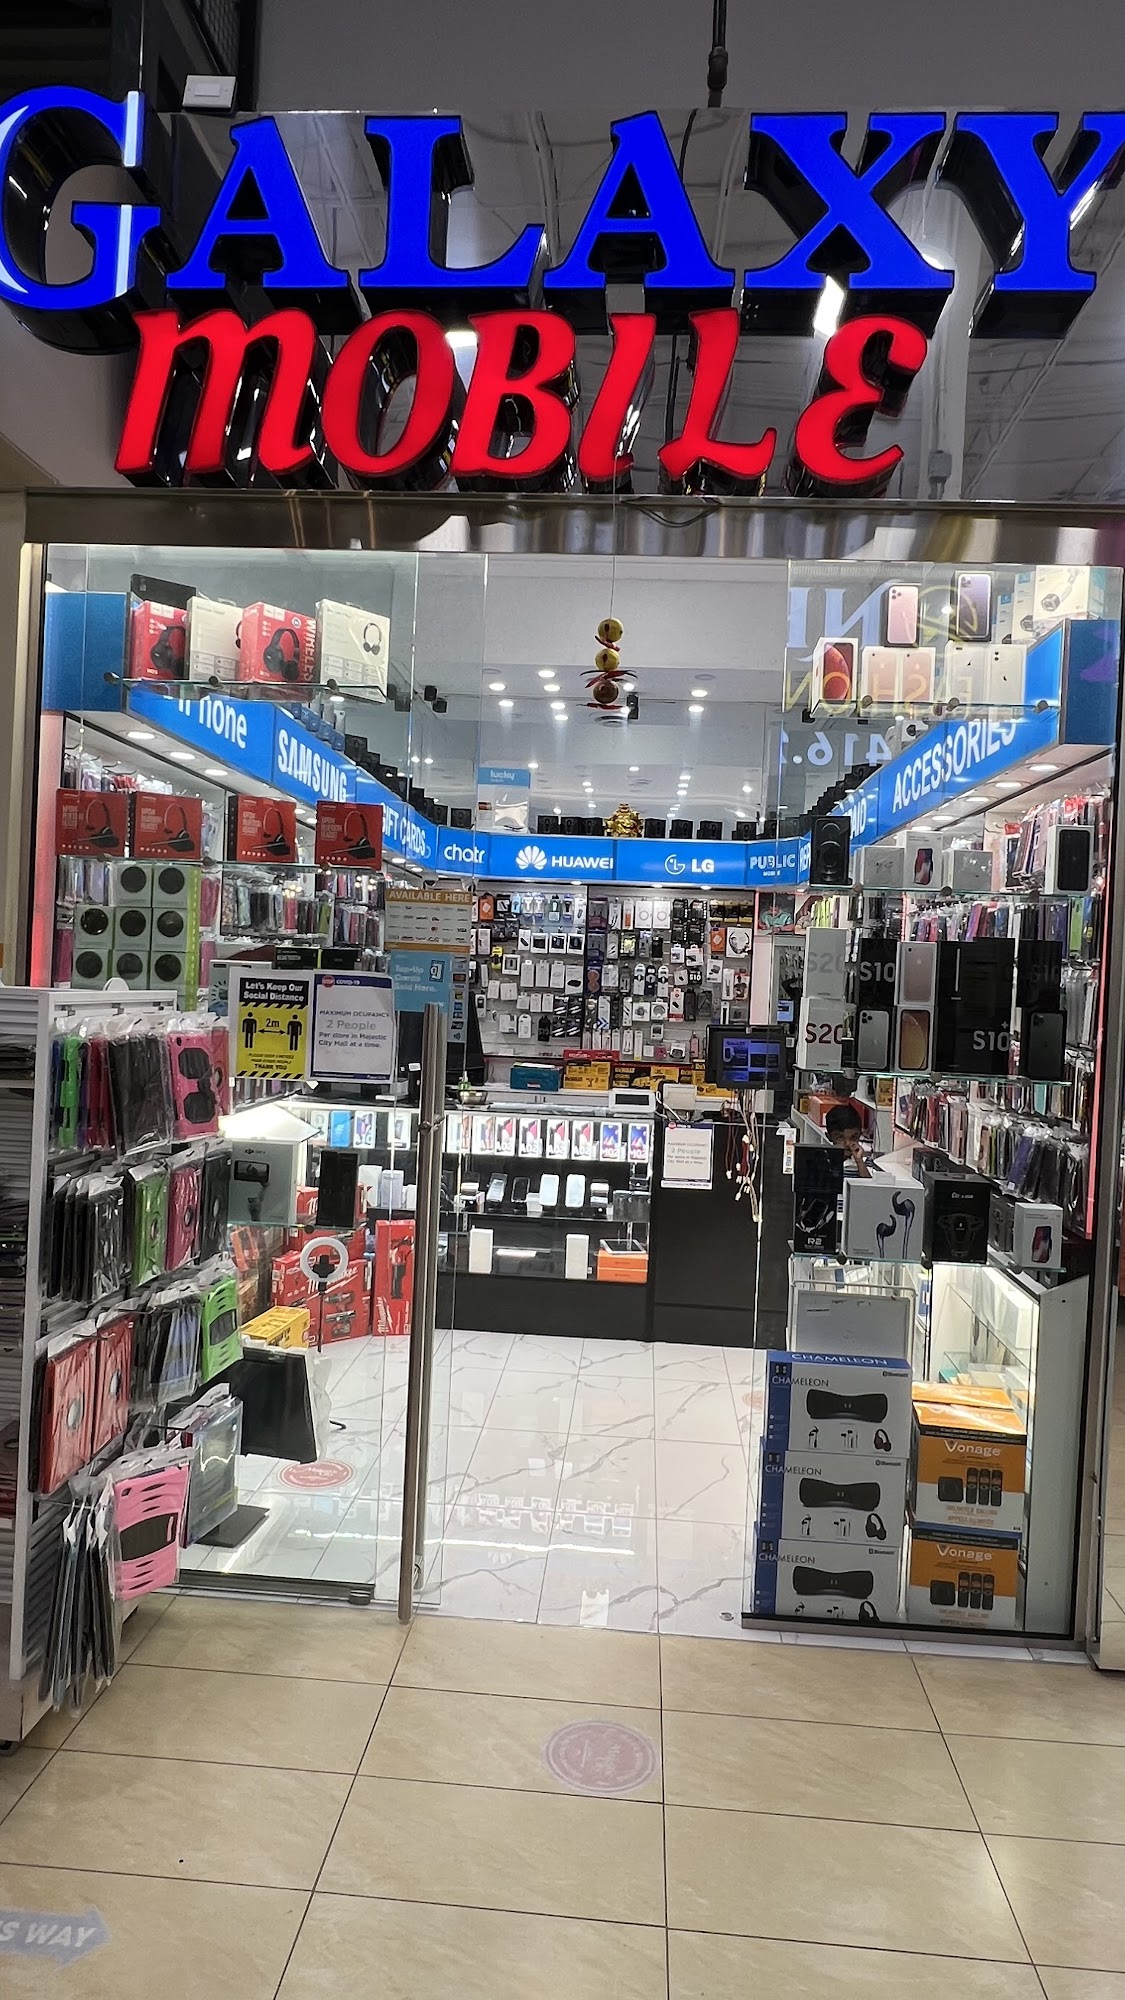 Galaxy Mobile. Phone Repair and Computer Repair Shop & Accessories